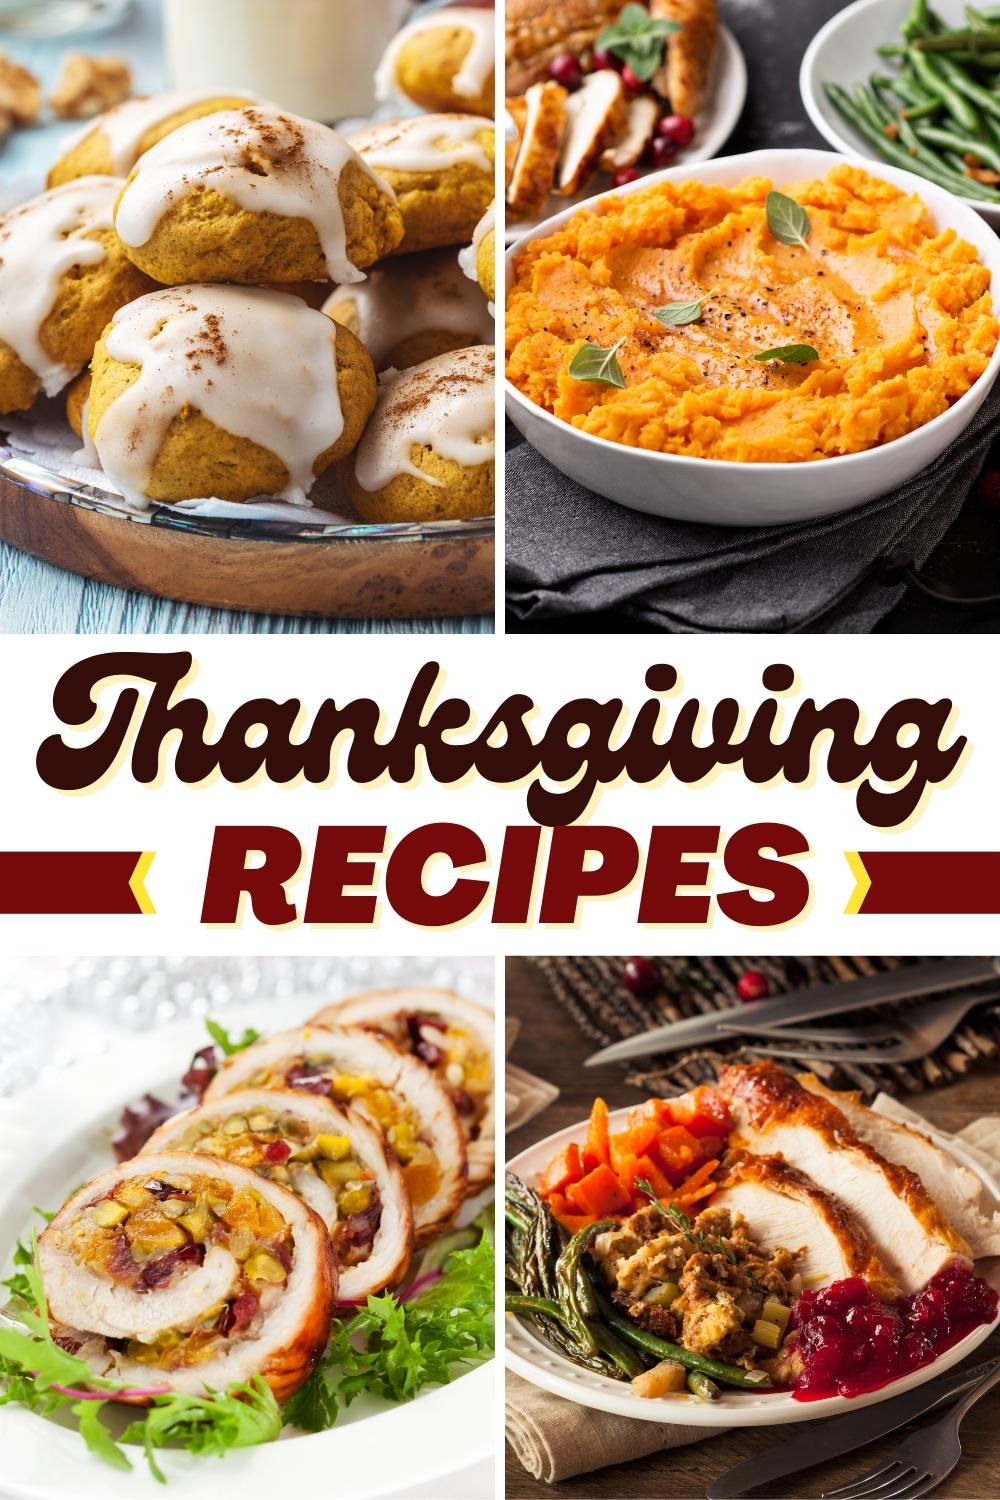 50 Best Thanksgiving Recipes & Menu Ideas - Insanely Good